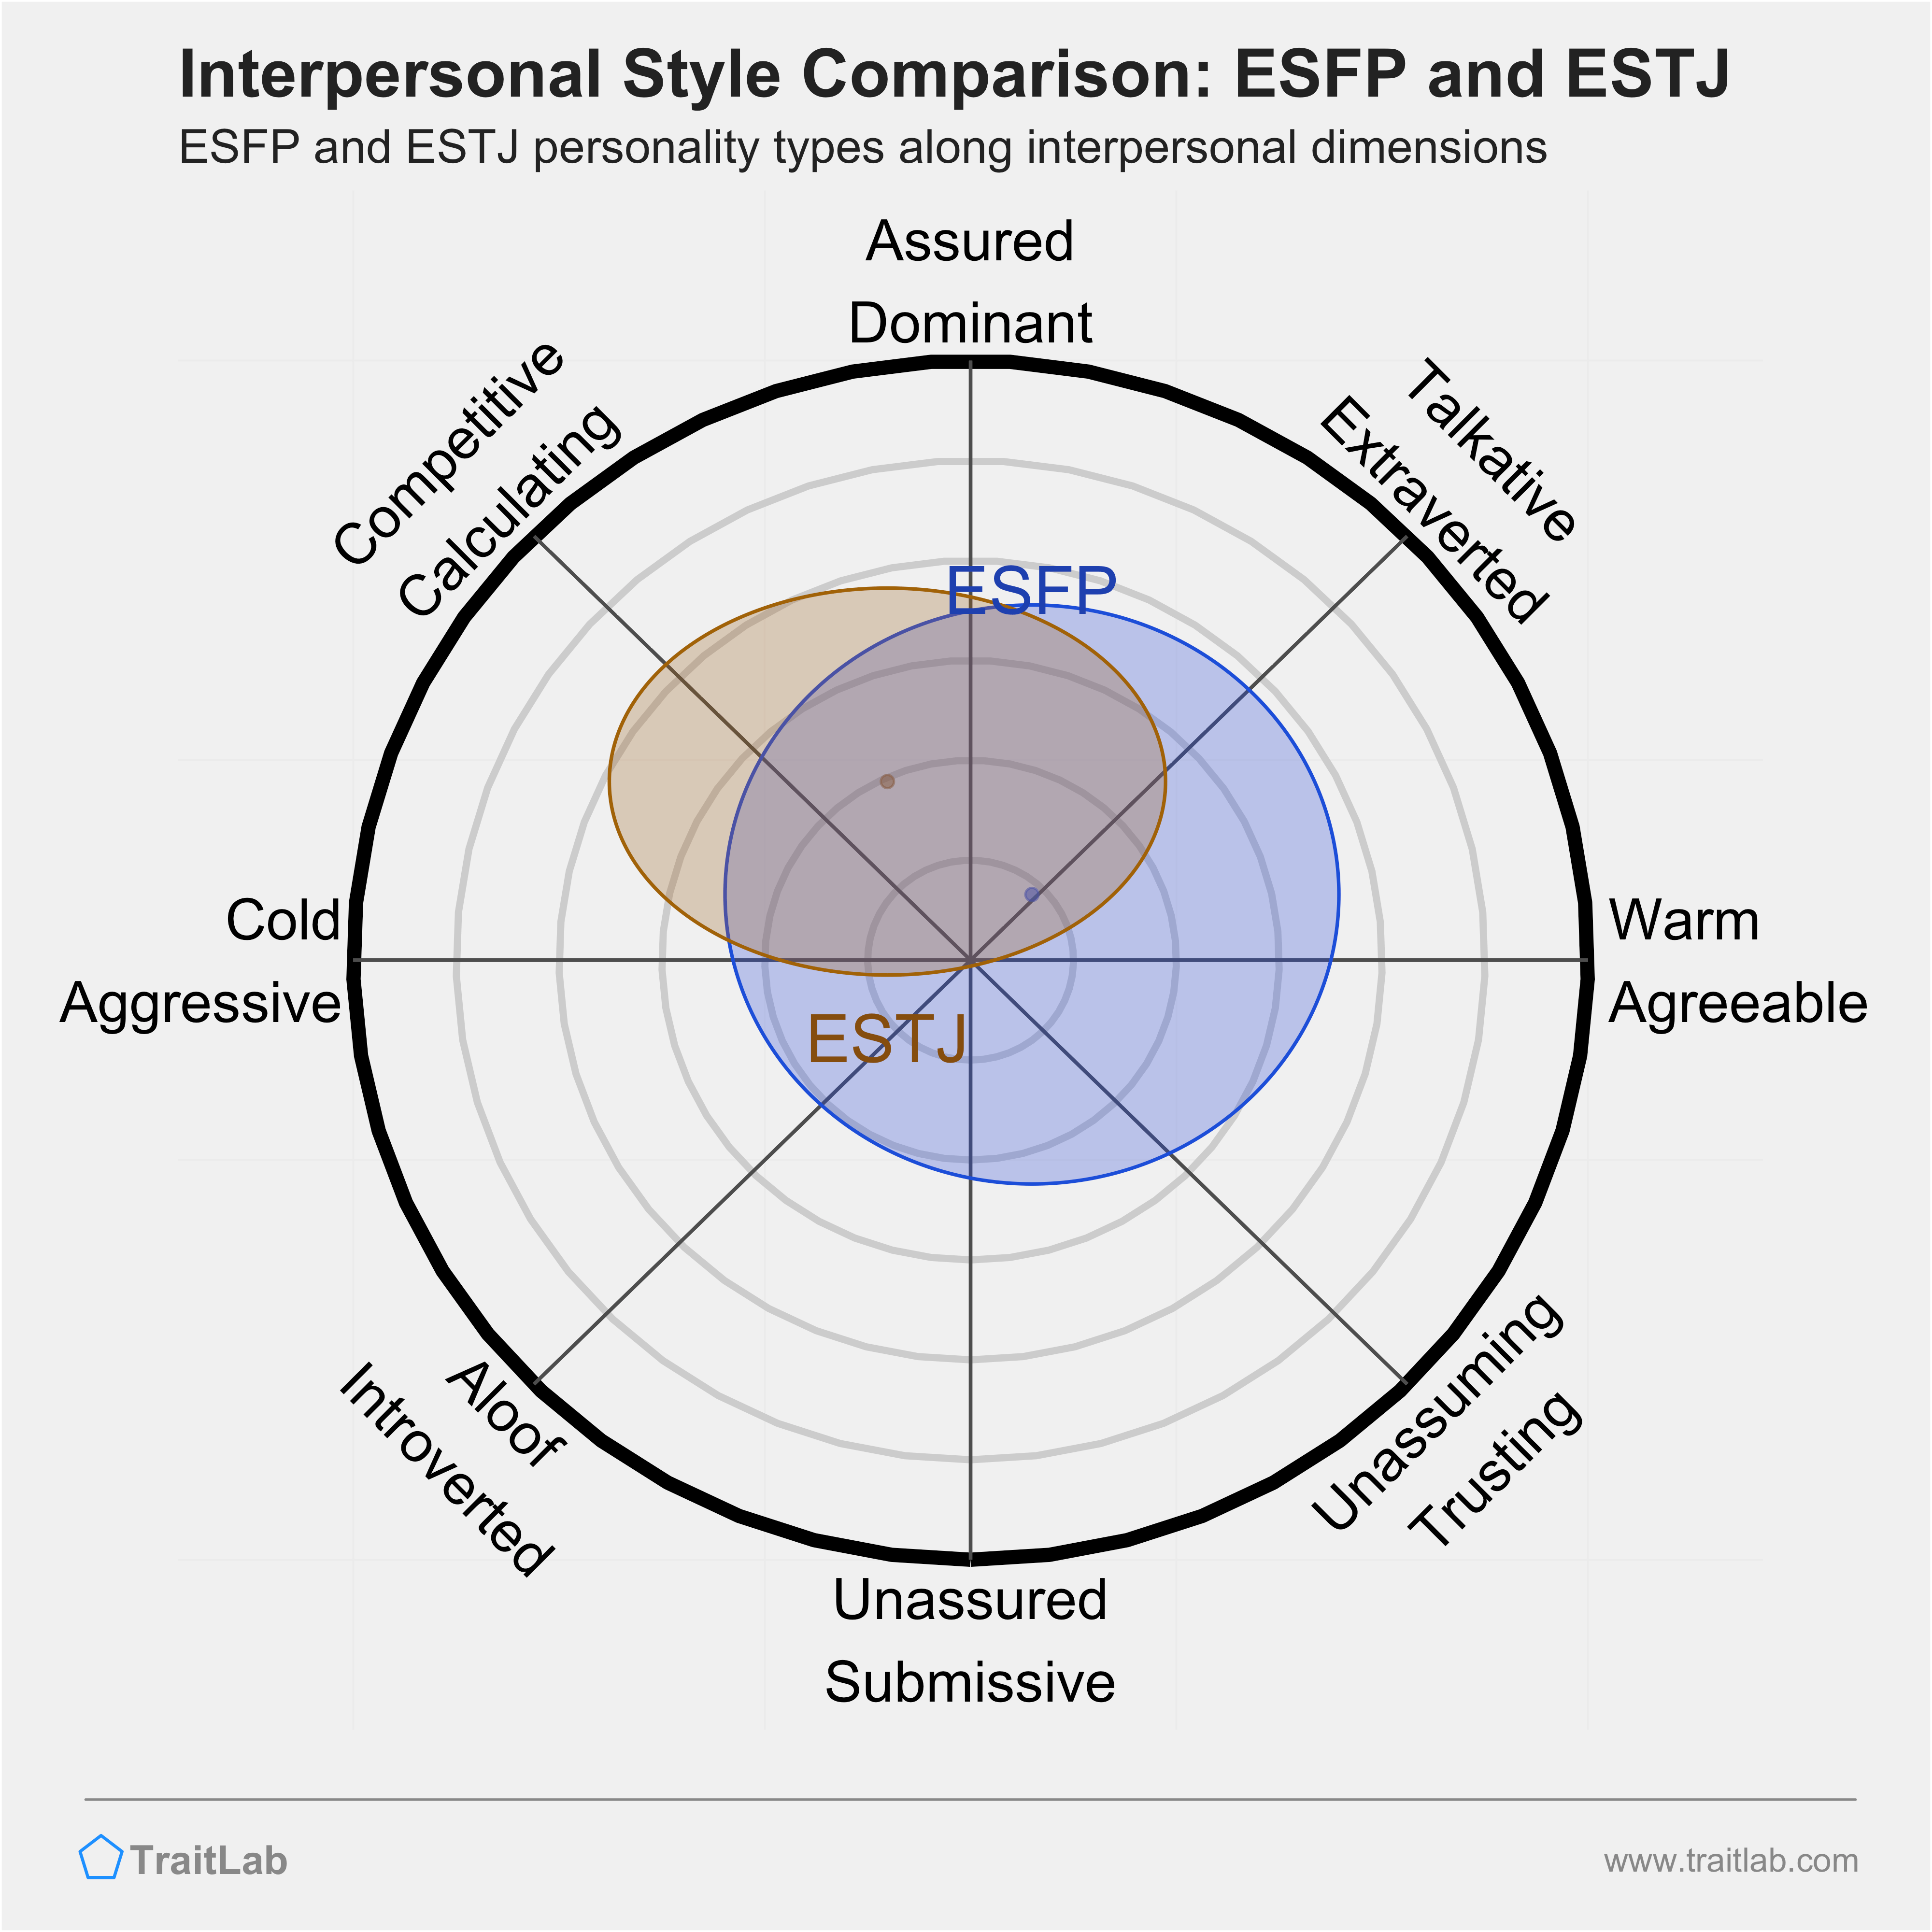 ESFP and ESTJ comparison across interpersonal dimensions